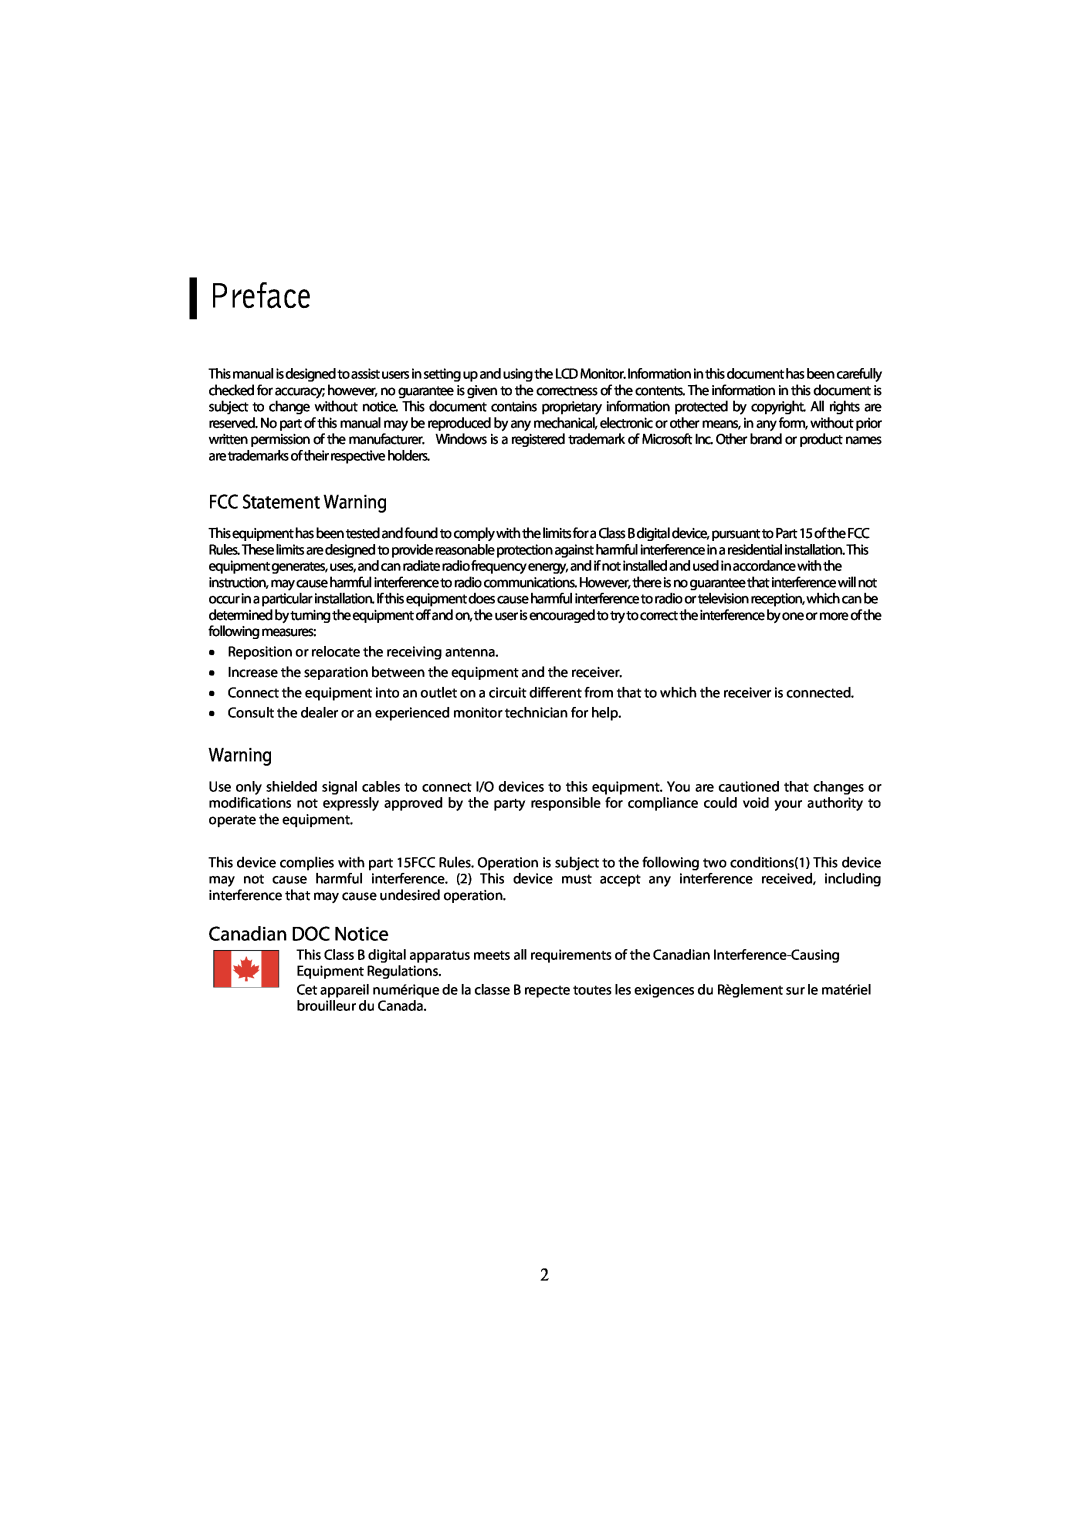 Planar PL1700M manual Preface, FCC Statement Warning, Canadian DOC Notice 